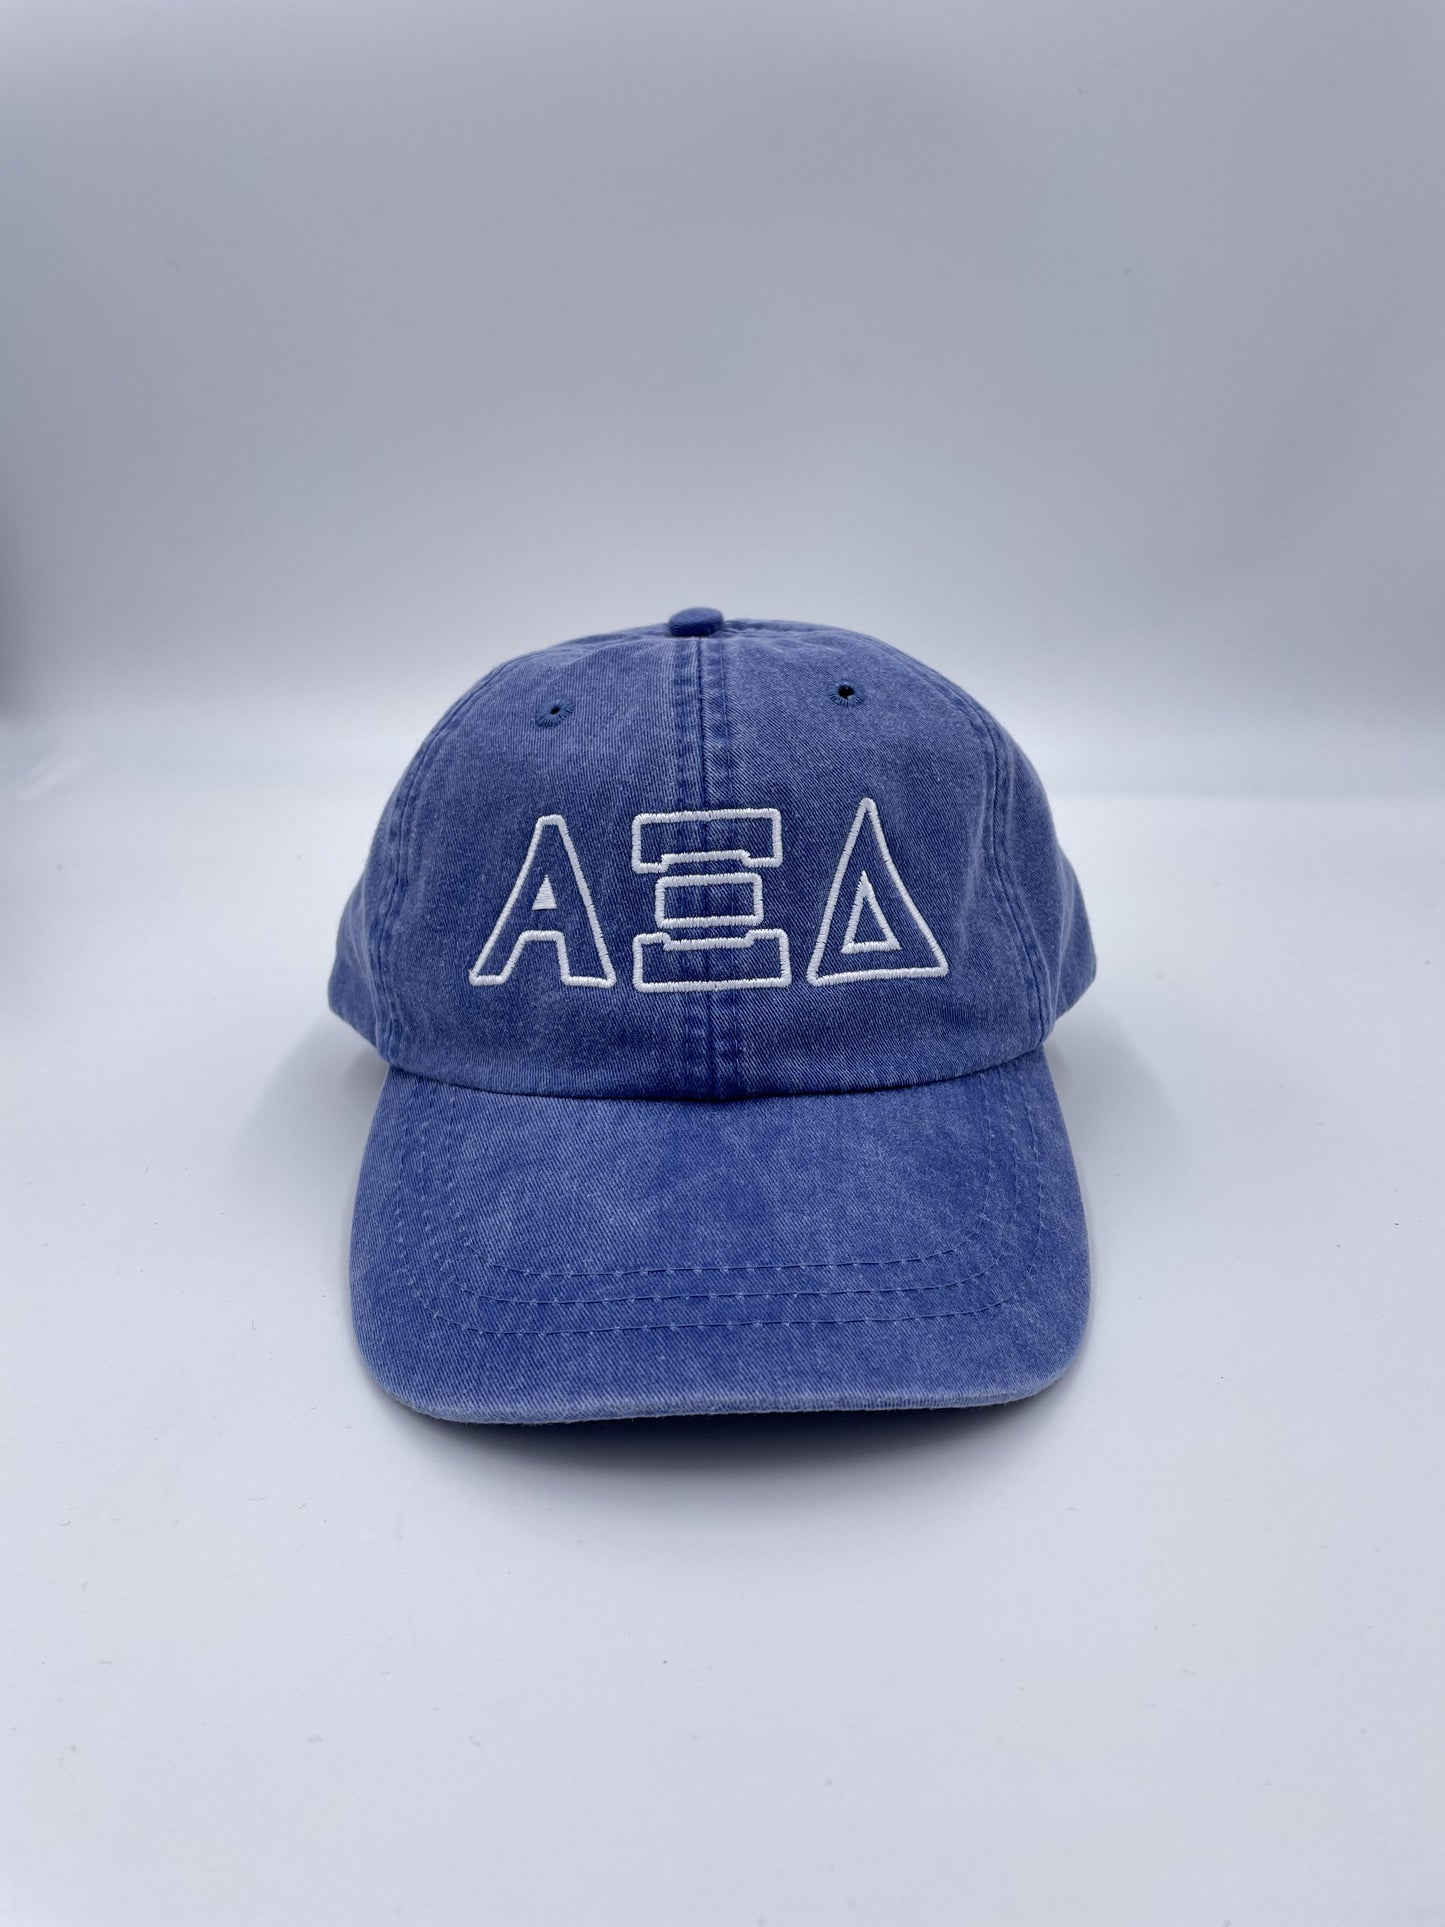 Outline Letter Hat Greek in Alpha Xi Delta at Wrapsody